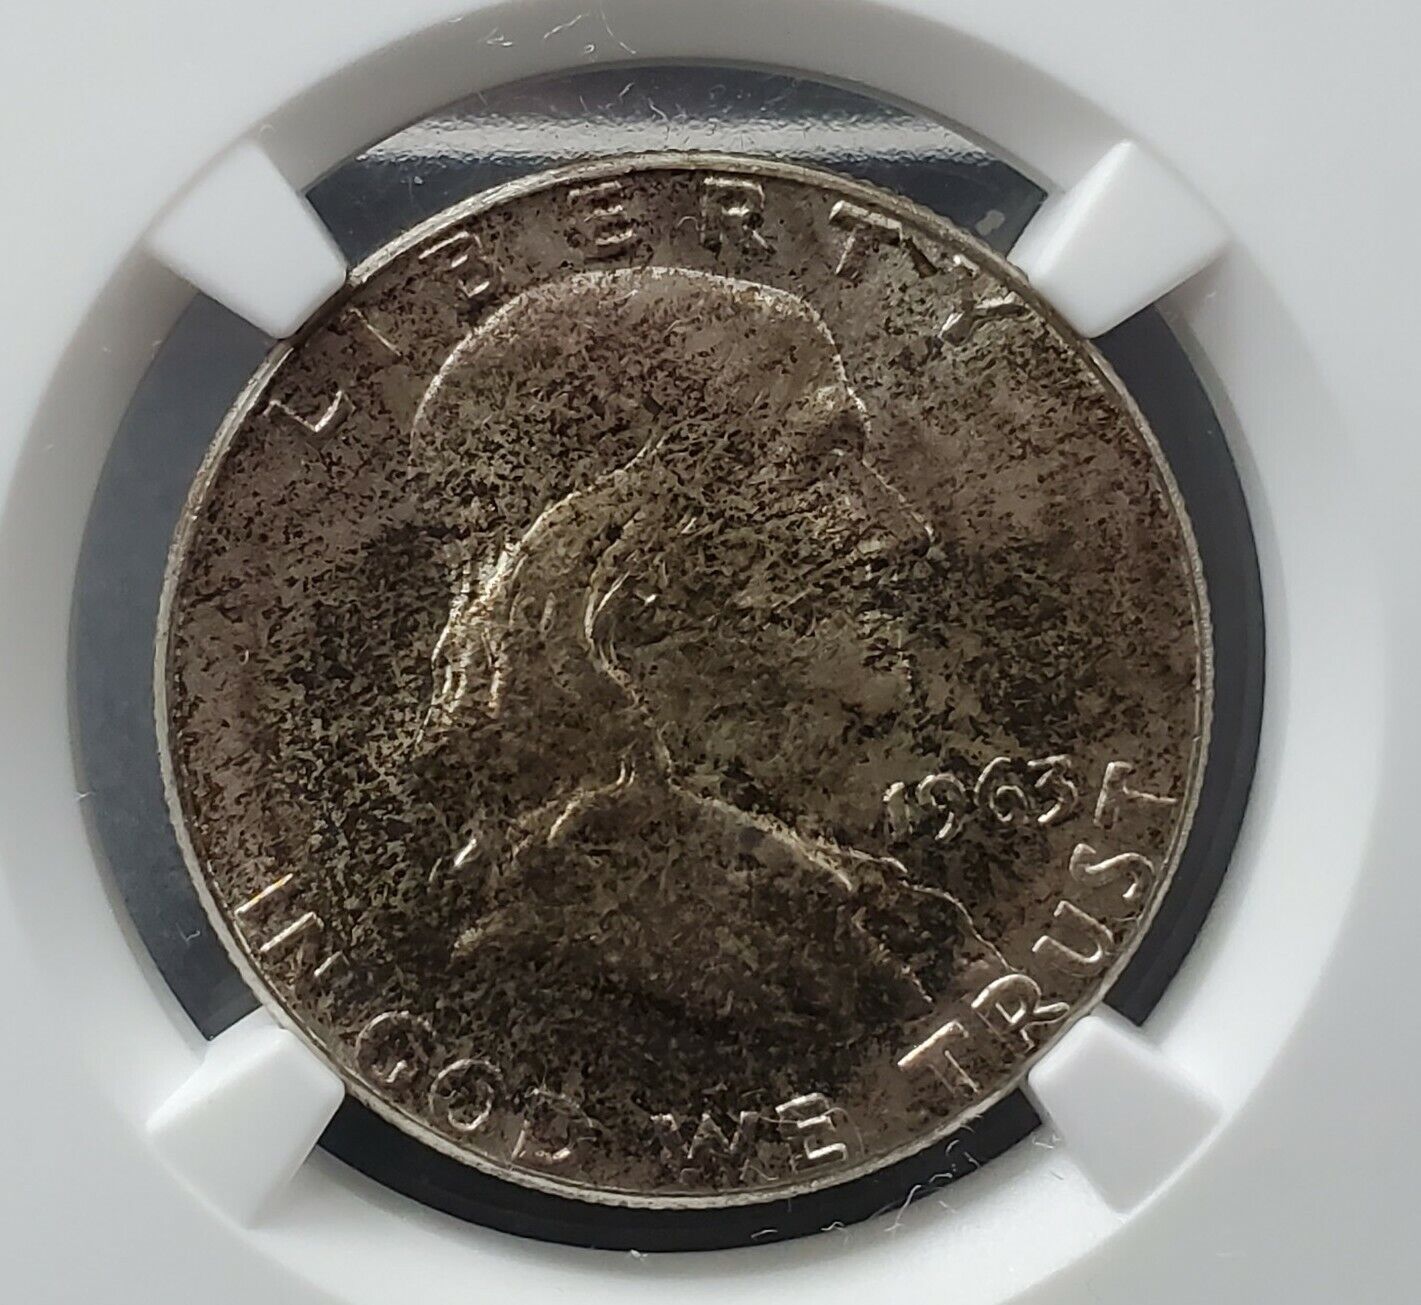 1963 p Franklin Silver Half Dollar Coin NGC MS64 CH BU PQ Neat Toning Toner OBV